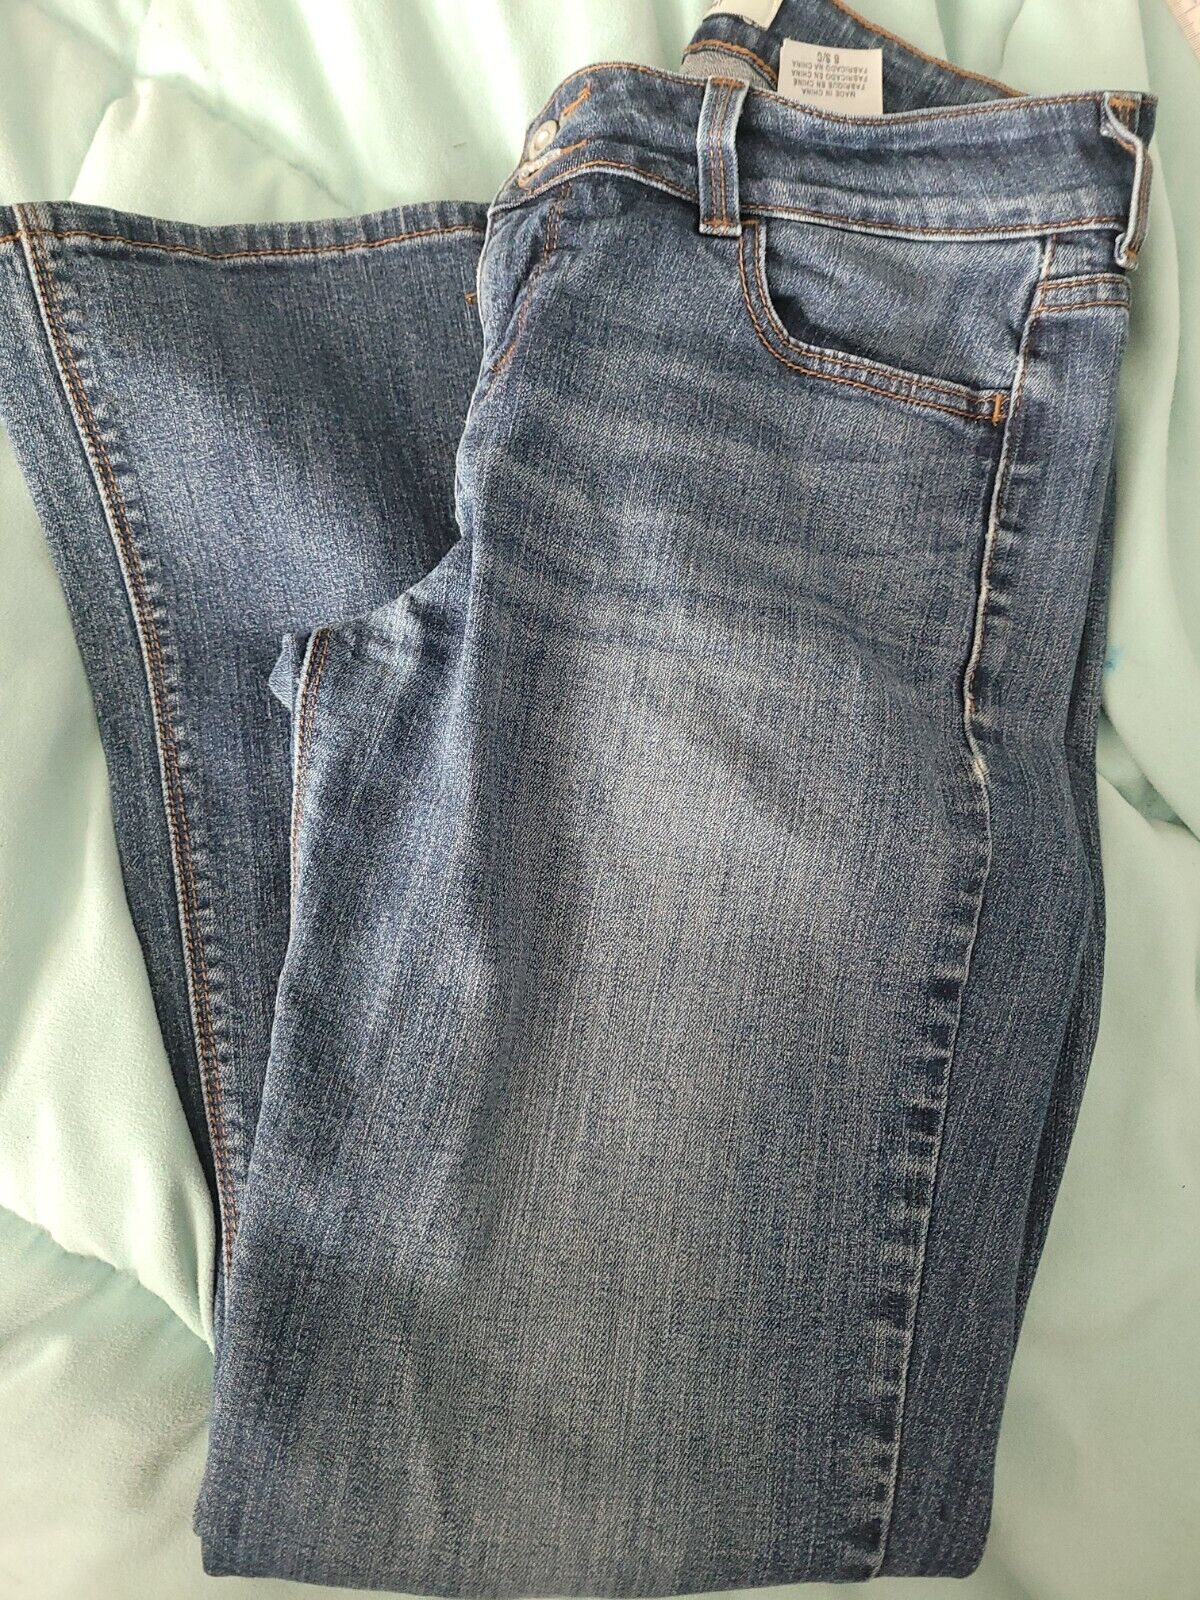 Levis 526 Jeans 8 SC Boot Cut Blue Denim Slender Boot PCW | eBay